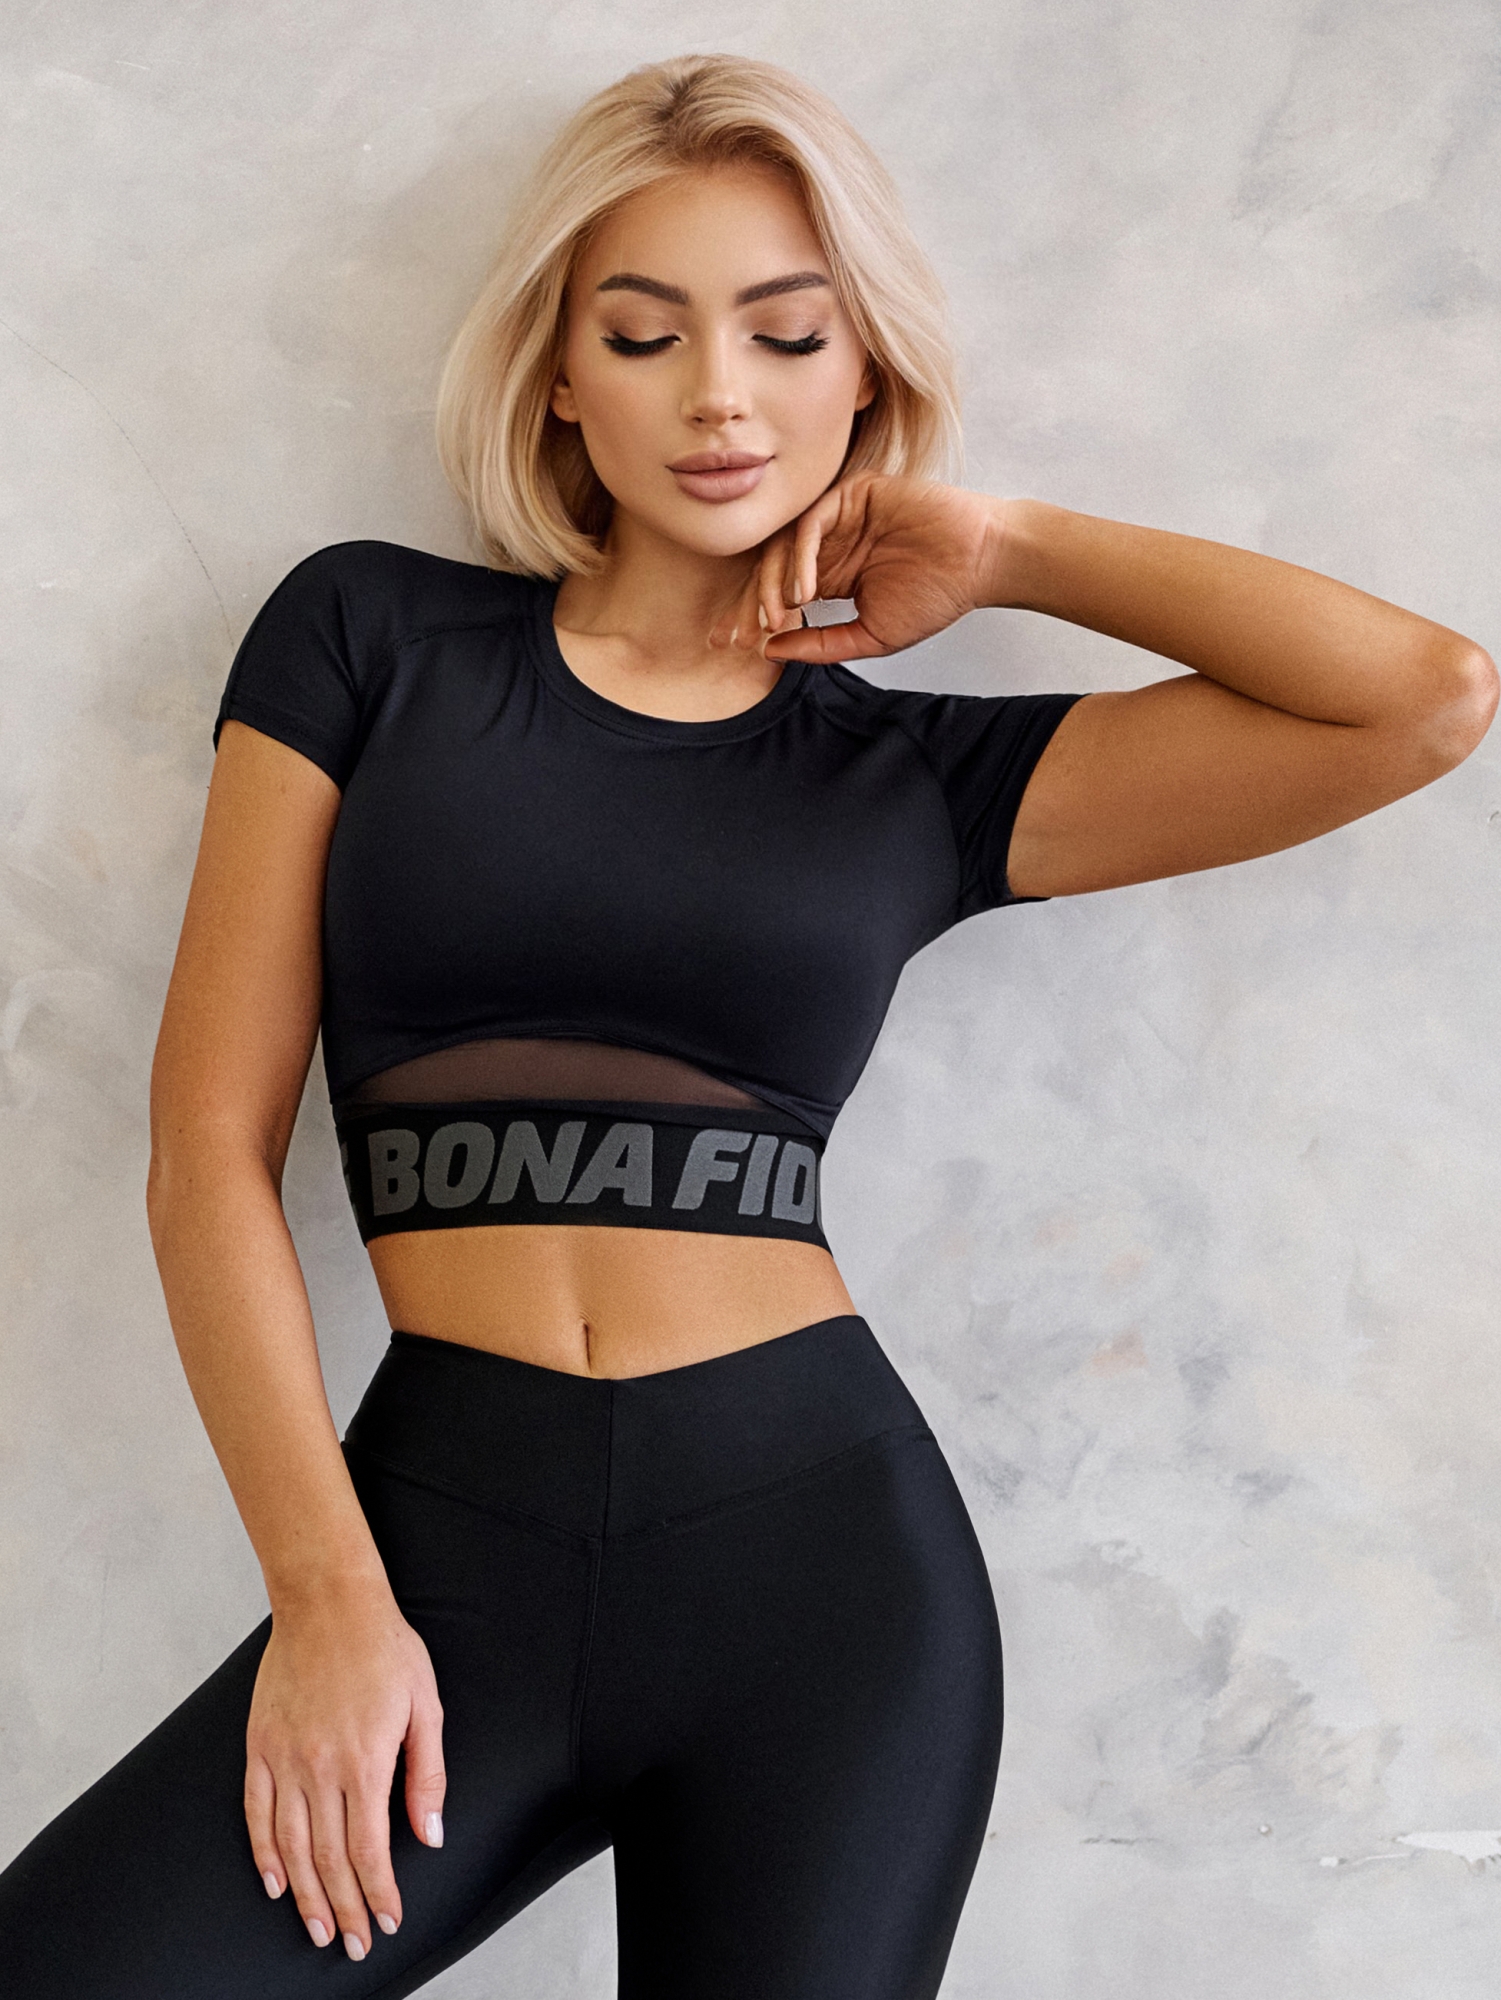 Bona Fide: Hi-Tech Shirt "Black" фото 2